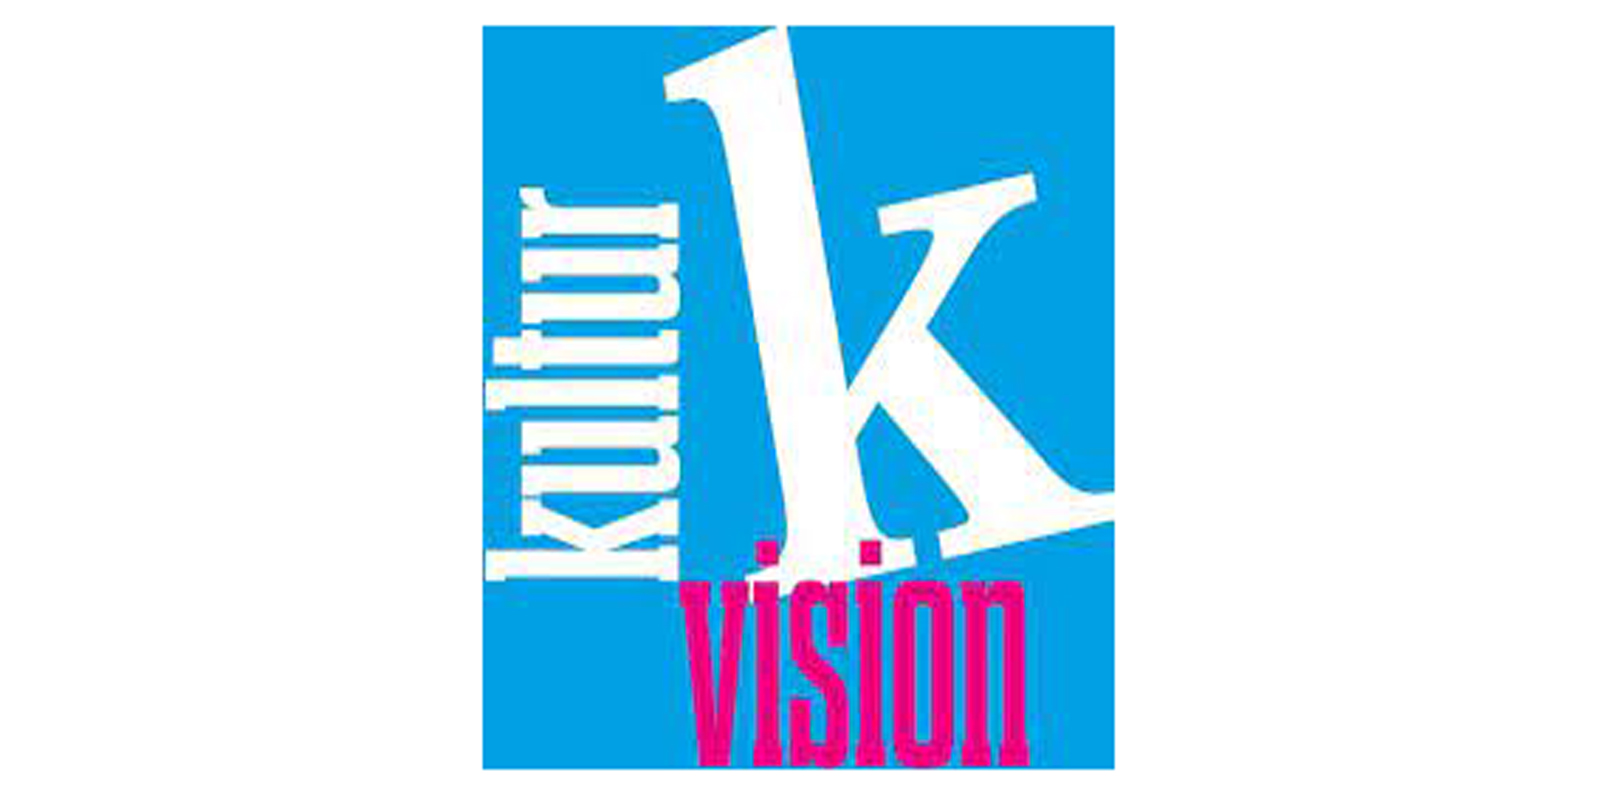 Kulturvision Logo Kachel 1600x800